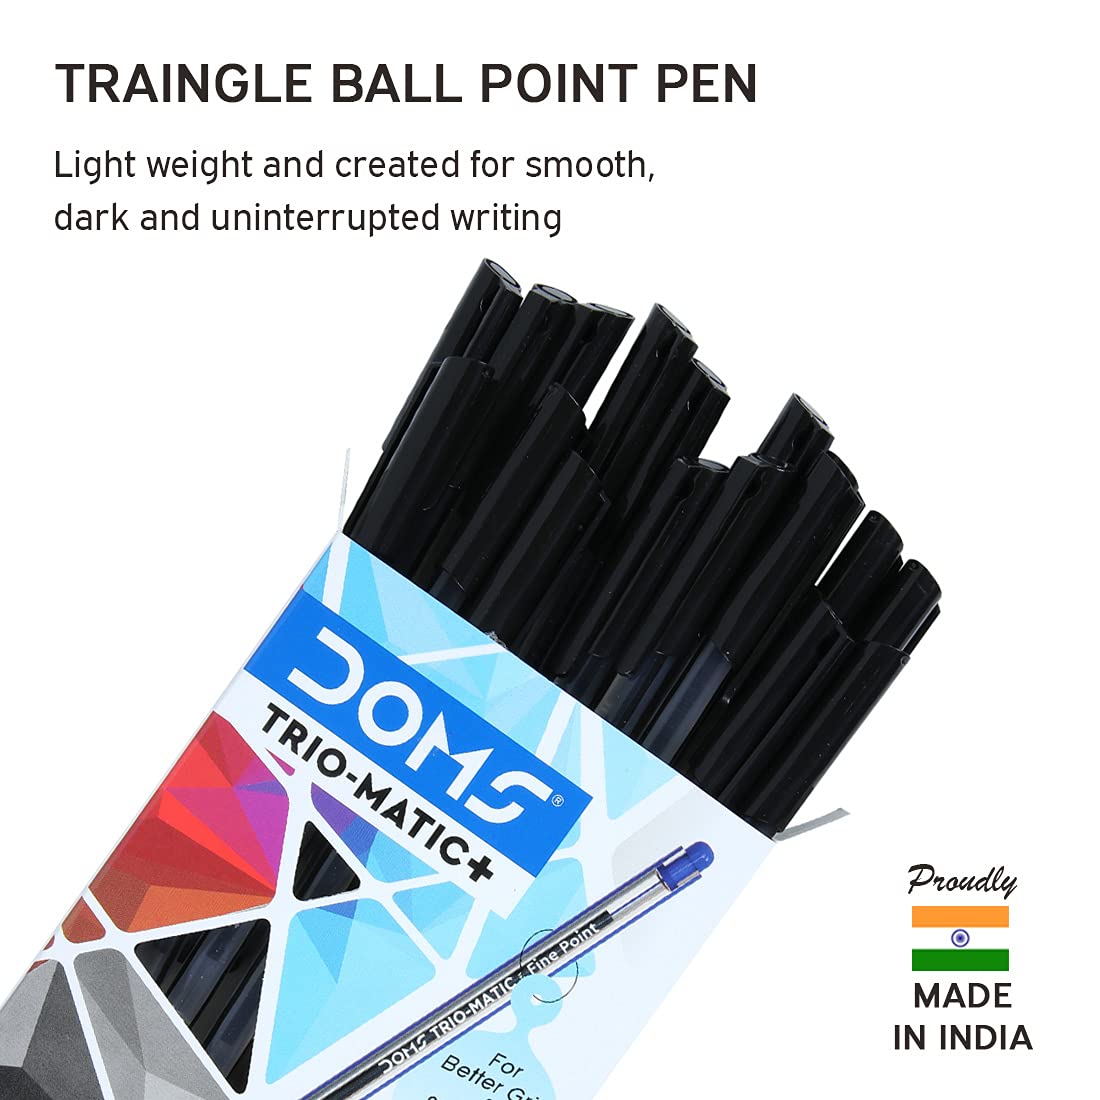 Doms Trio-Matic + Ball Point Pens - Black